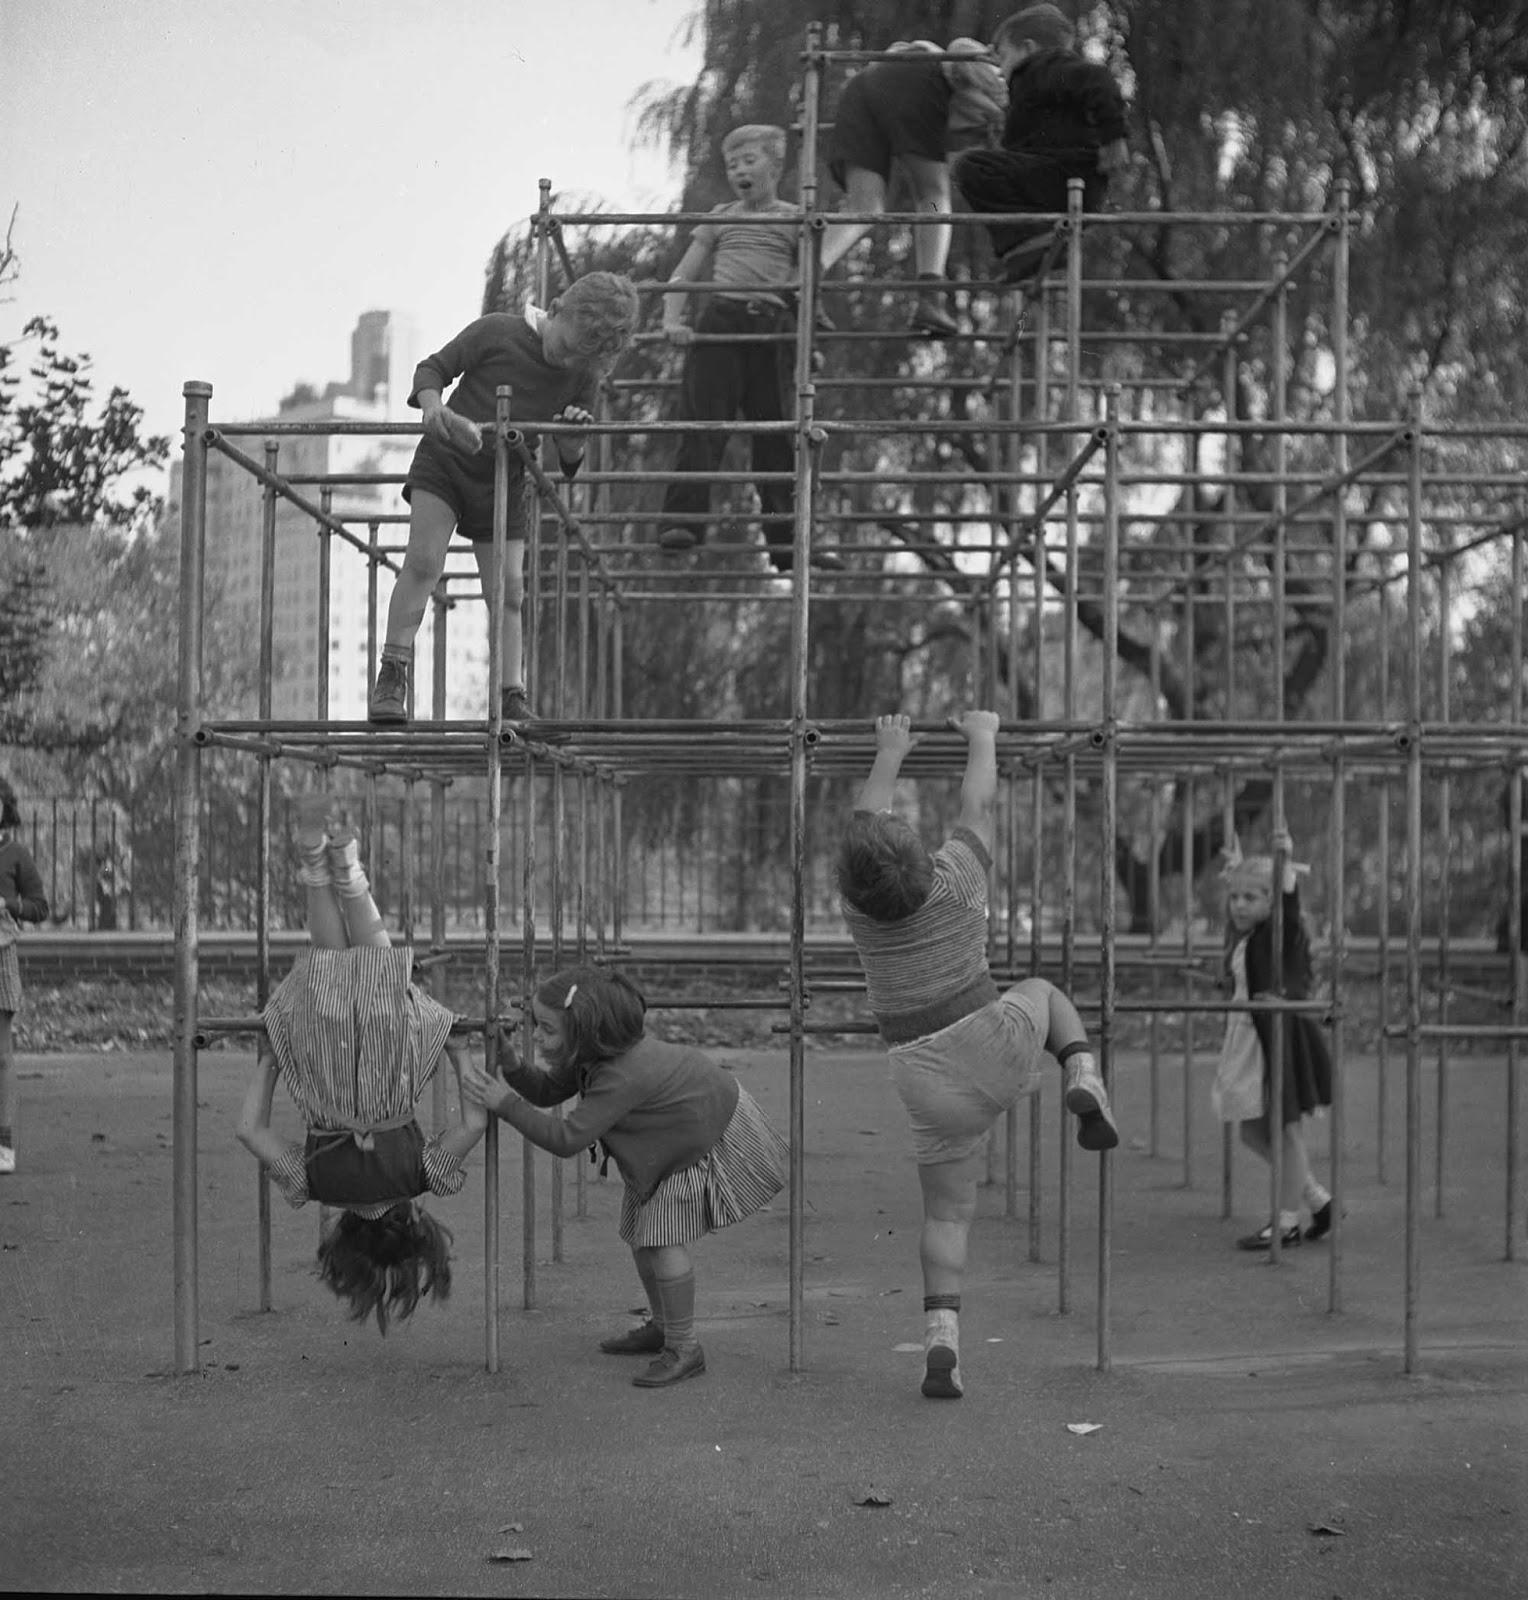 Czech-American children, climbing on monkey bars in Central Park playground.